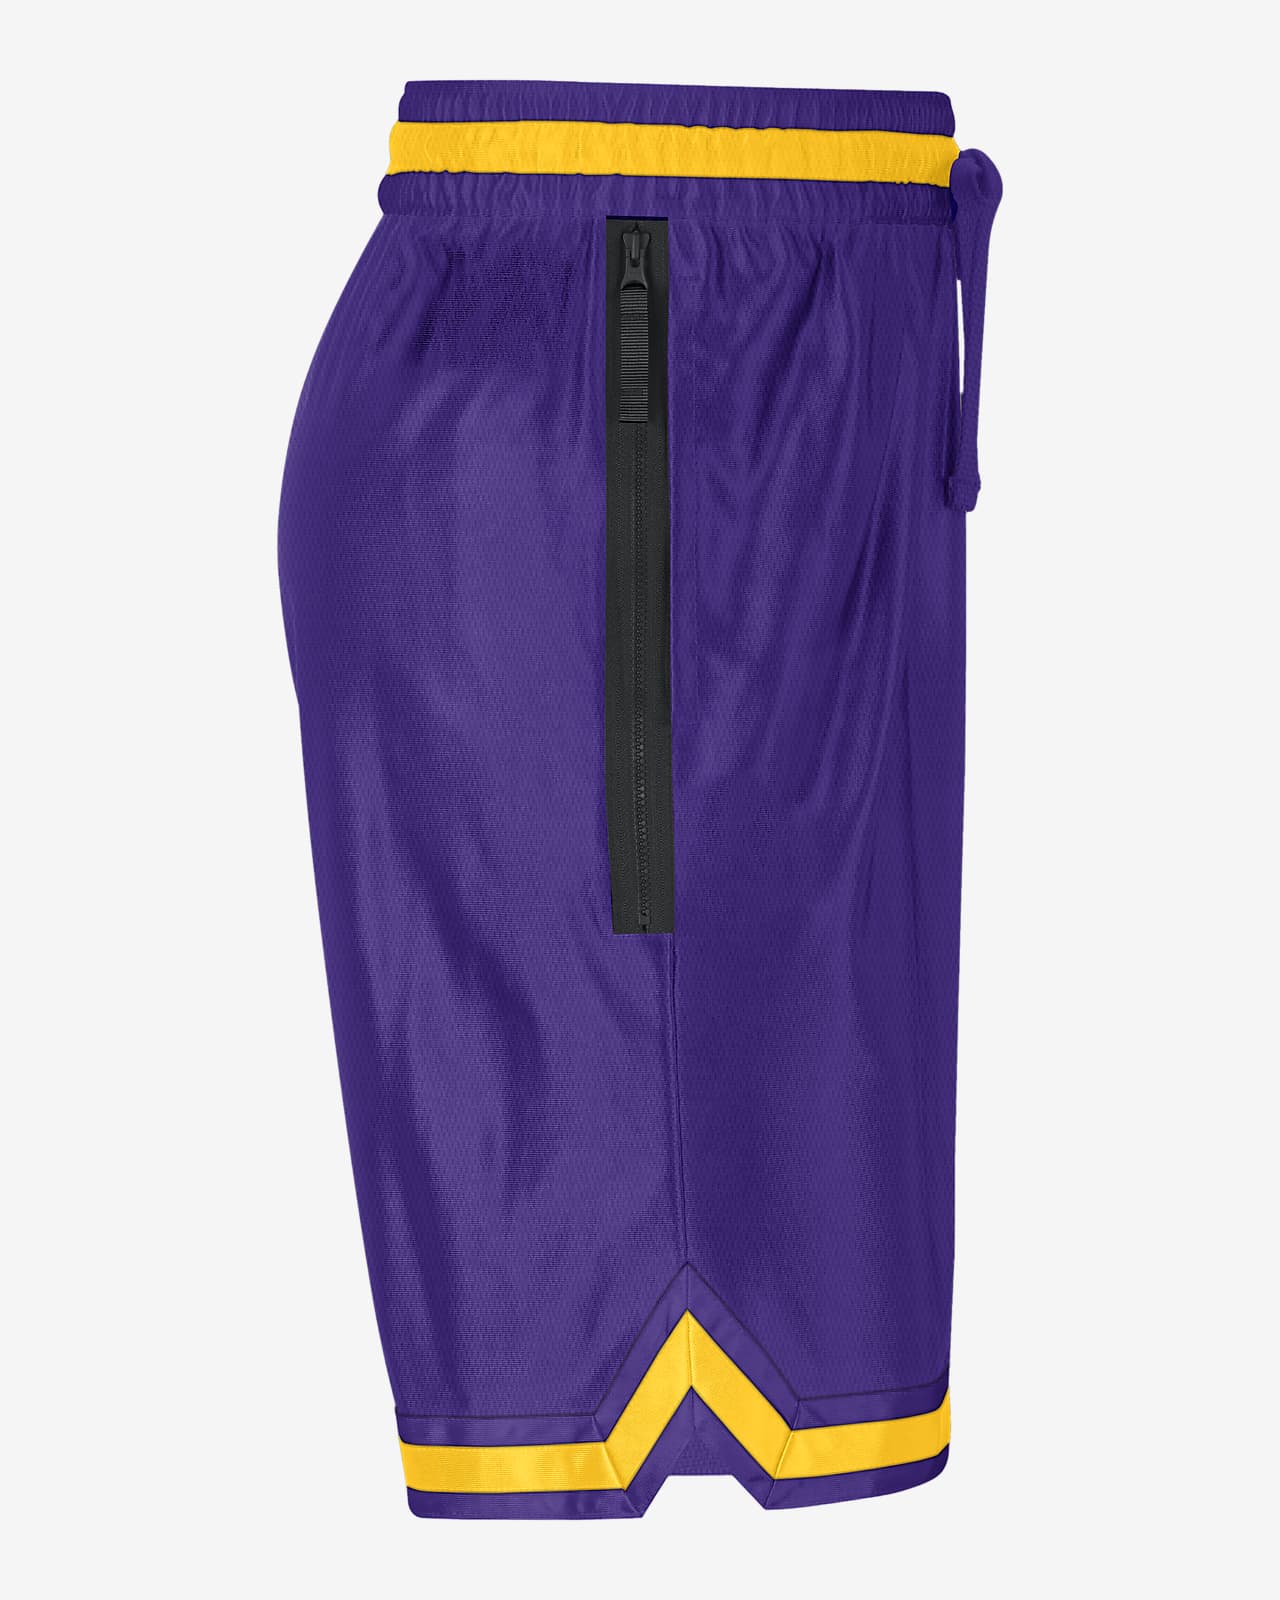 Nike Basketball NBA LA Lakers shorts in purple